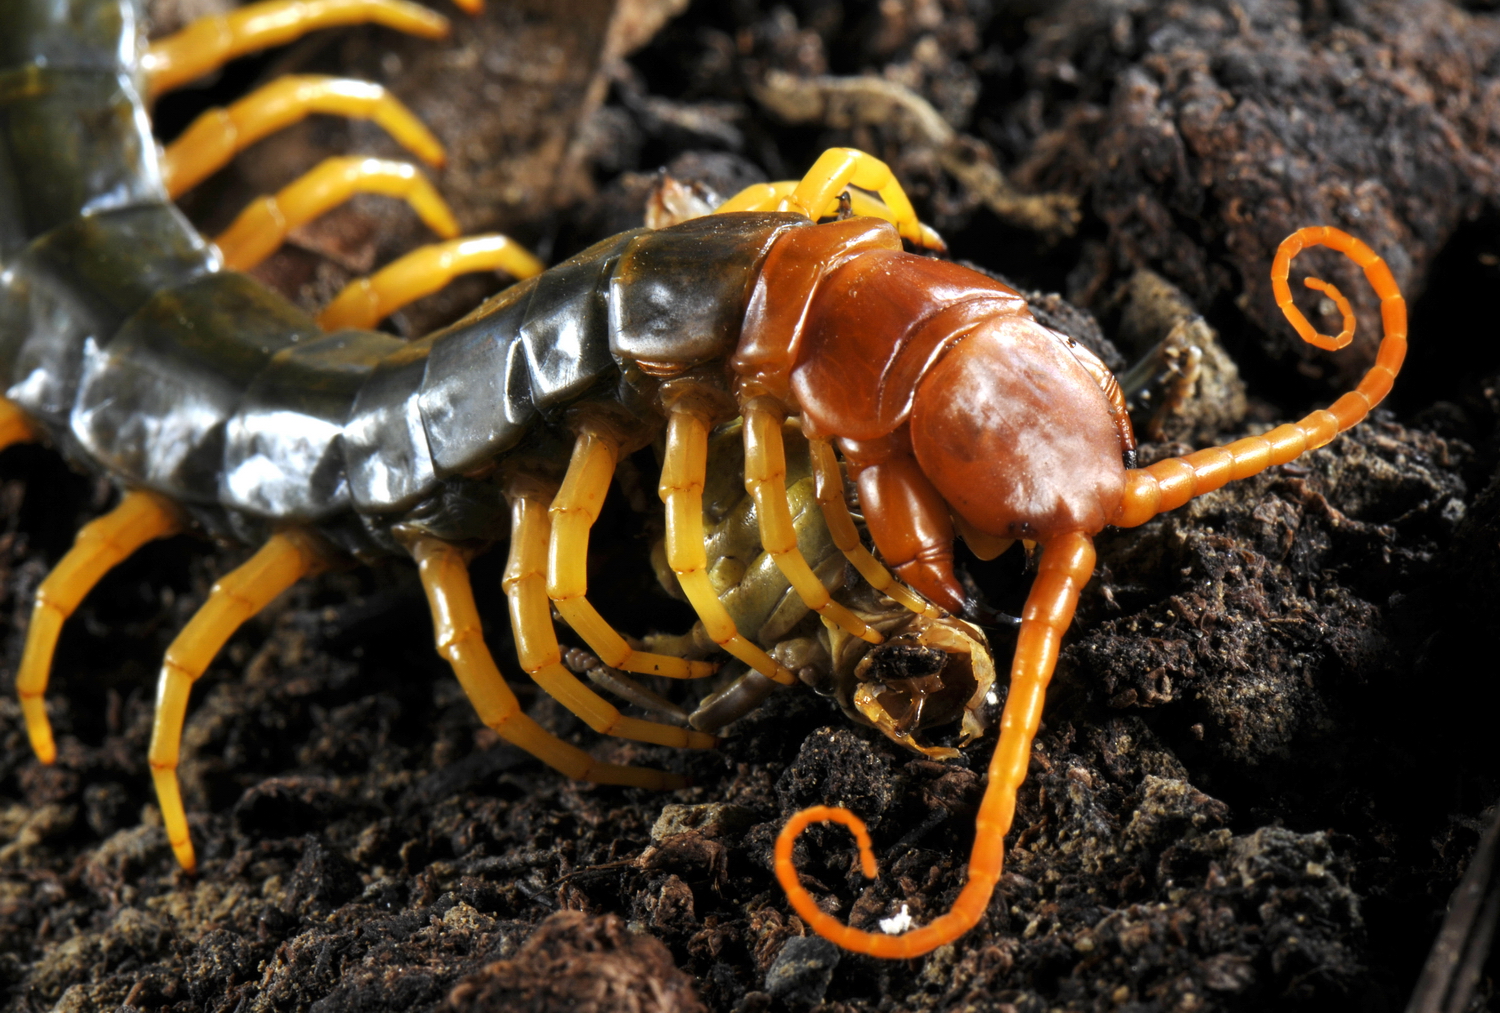 Texas centipede eating grasshopper